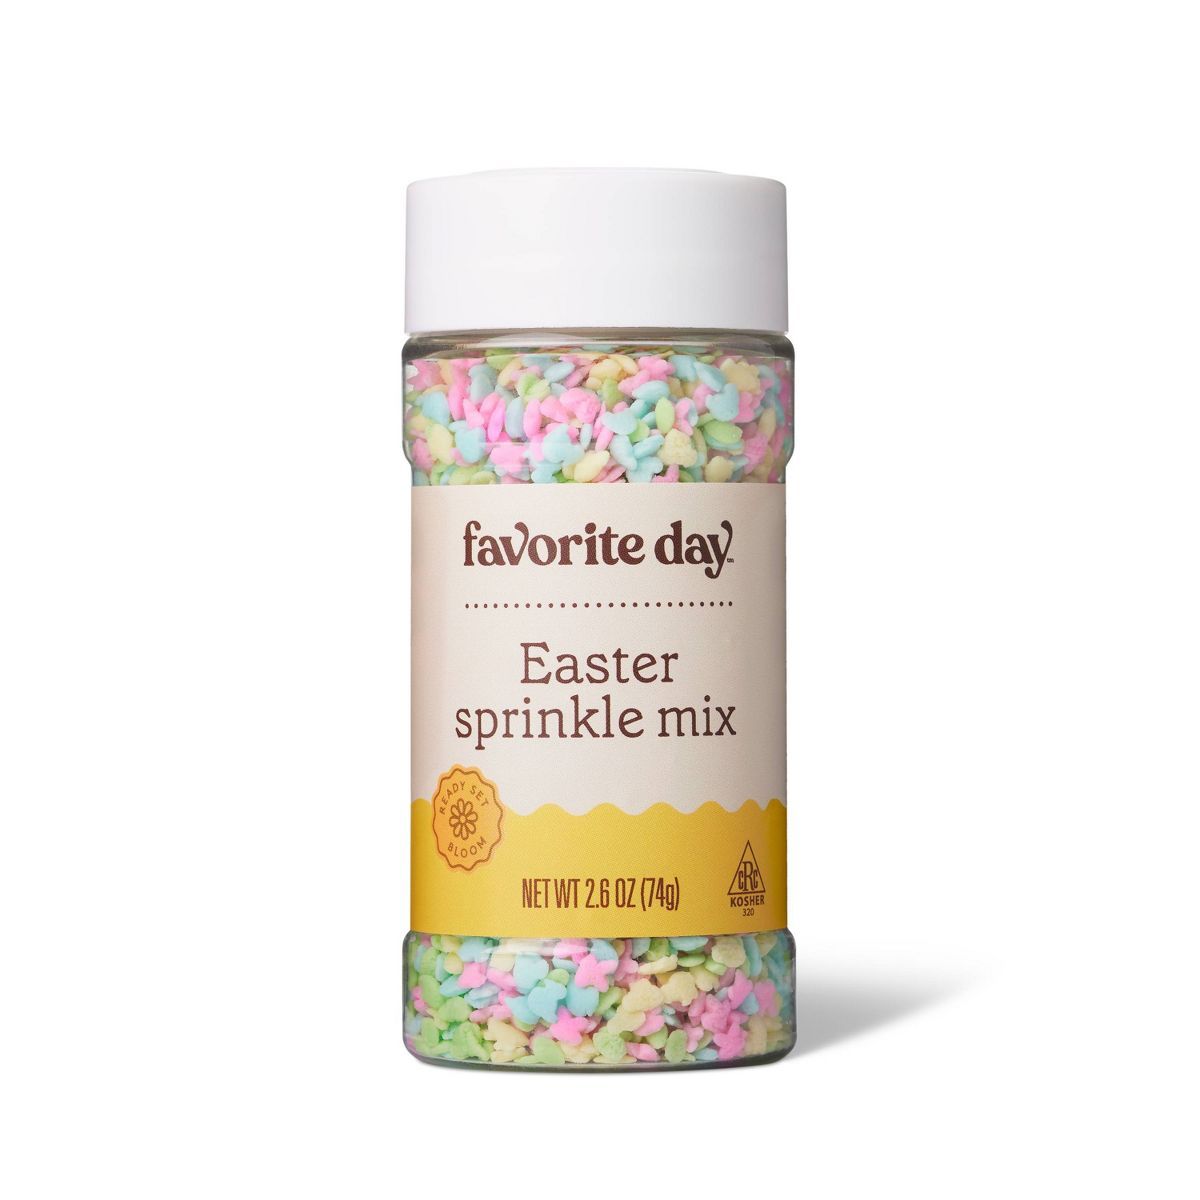 Spring Mix Edible Confetti Sprinkles - 2.6oz - Favorite Day™ | Target